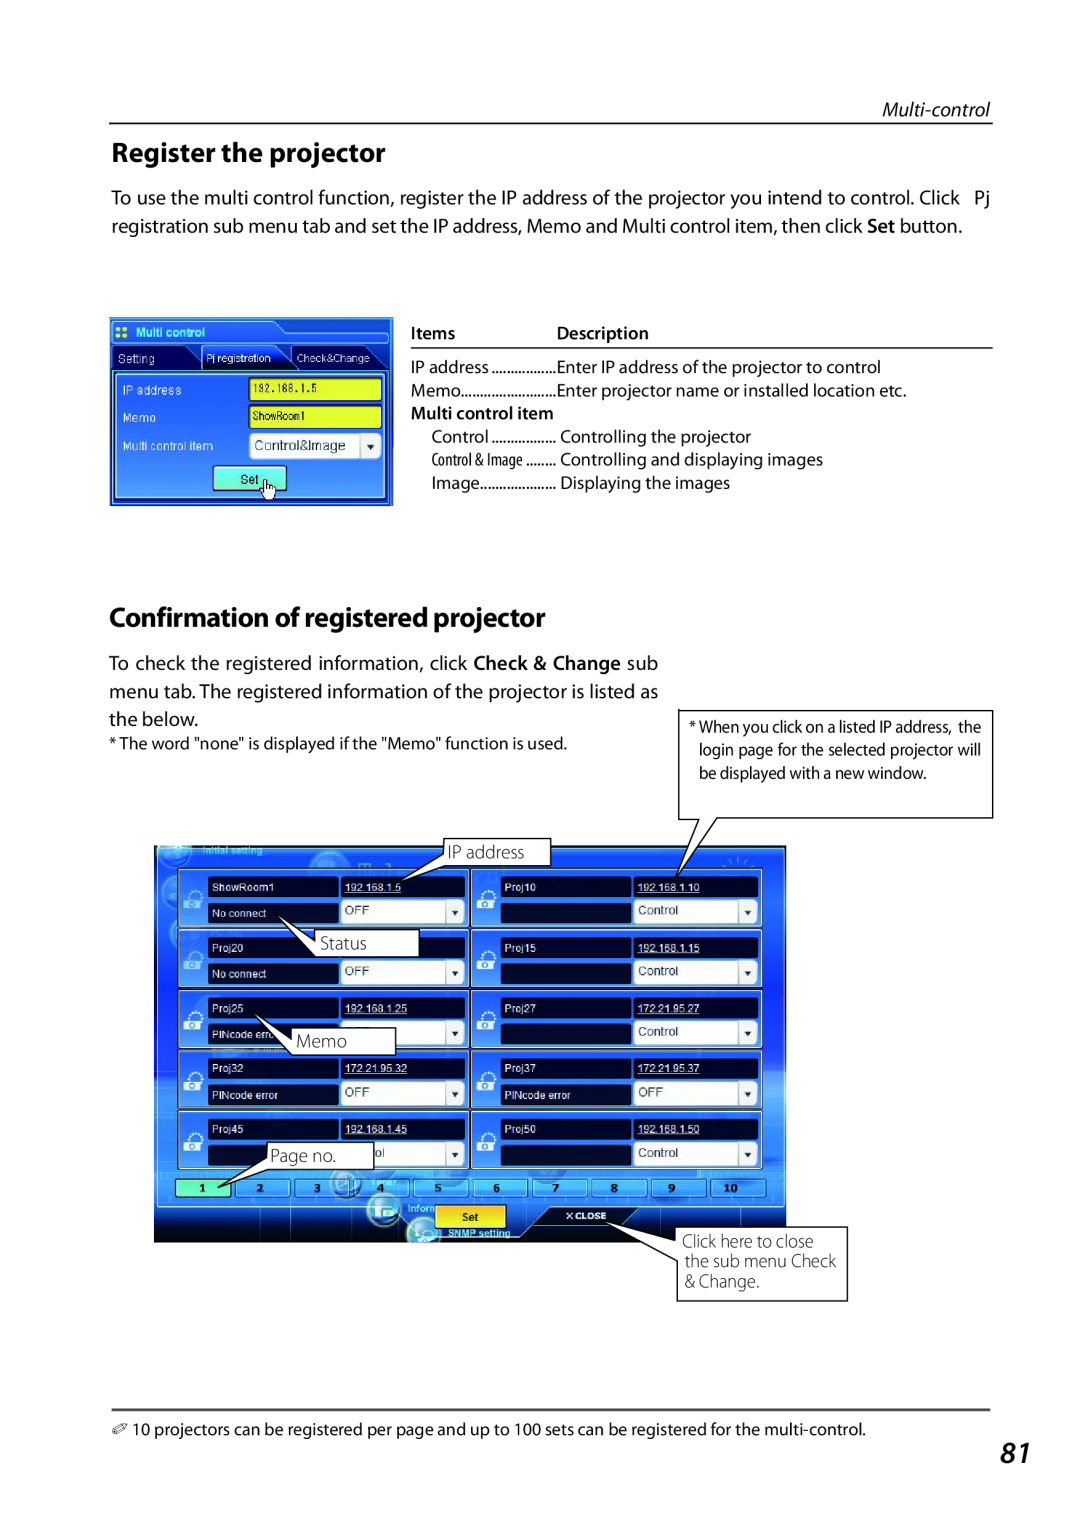 Sanyo QXXAVC922---P Register the projector, Confirmation of registered projector, Multi-control, Items, Description 